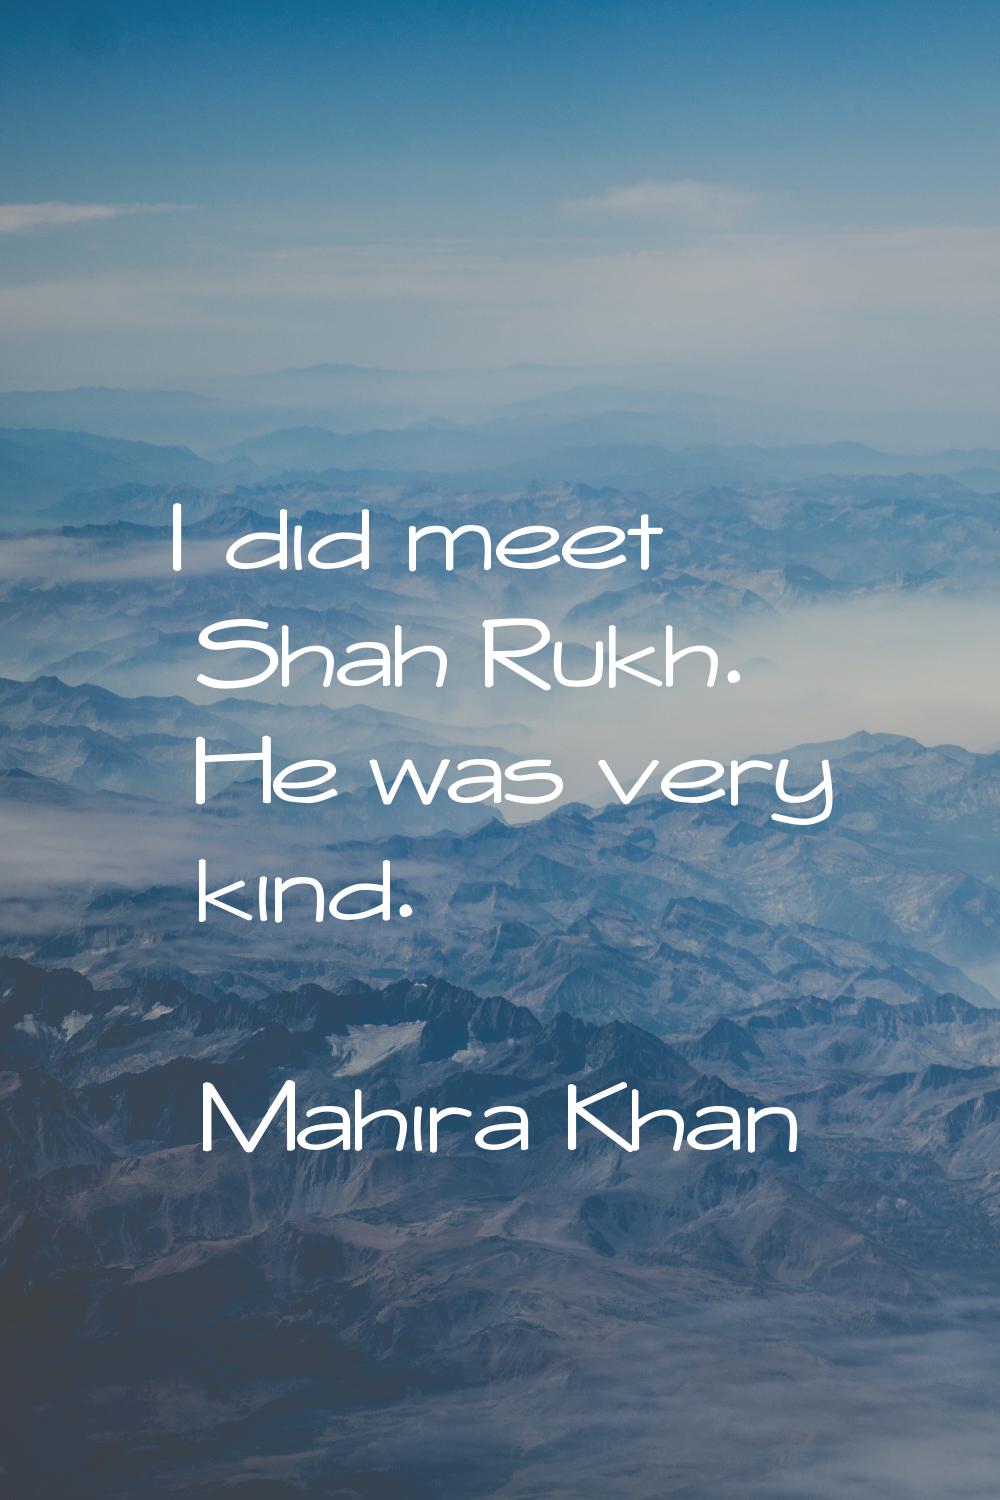 I did meet Shah Rukh. He was very kind.